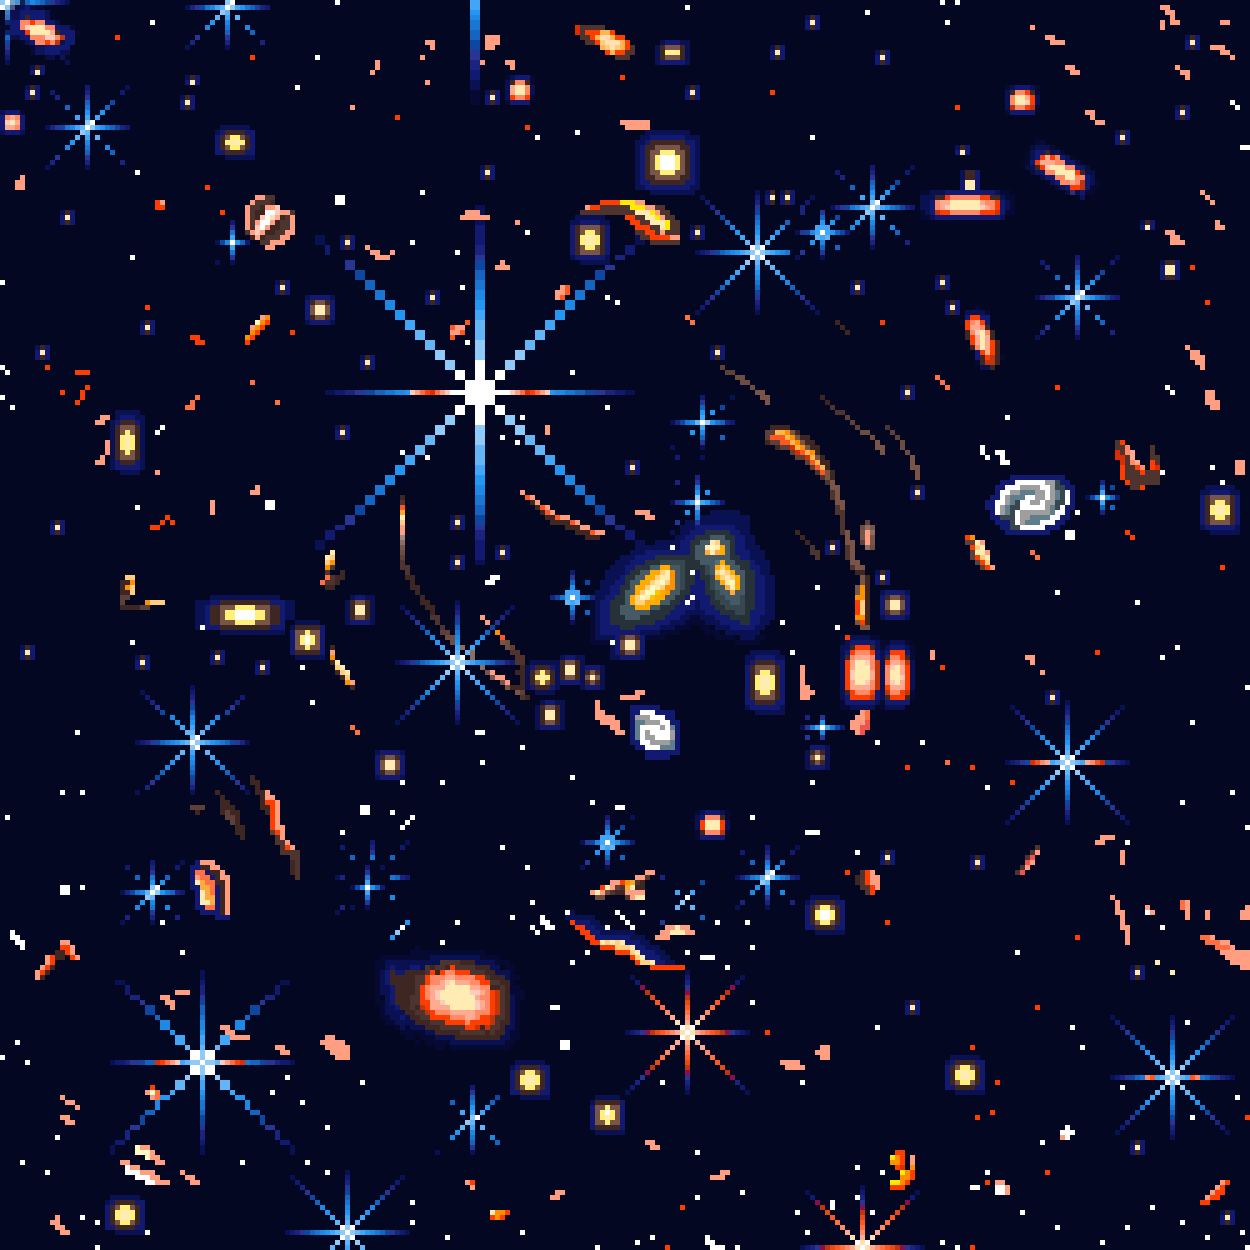 Deep Space - James Webb Telescope